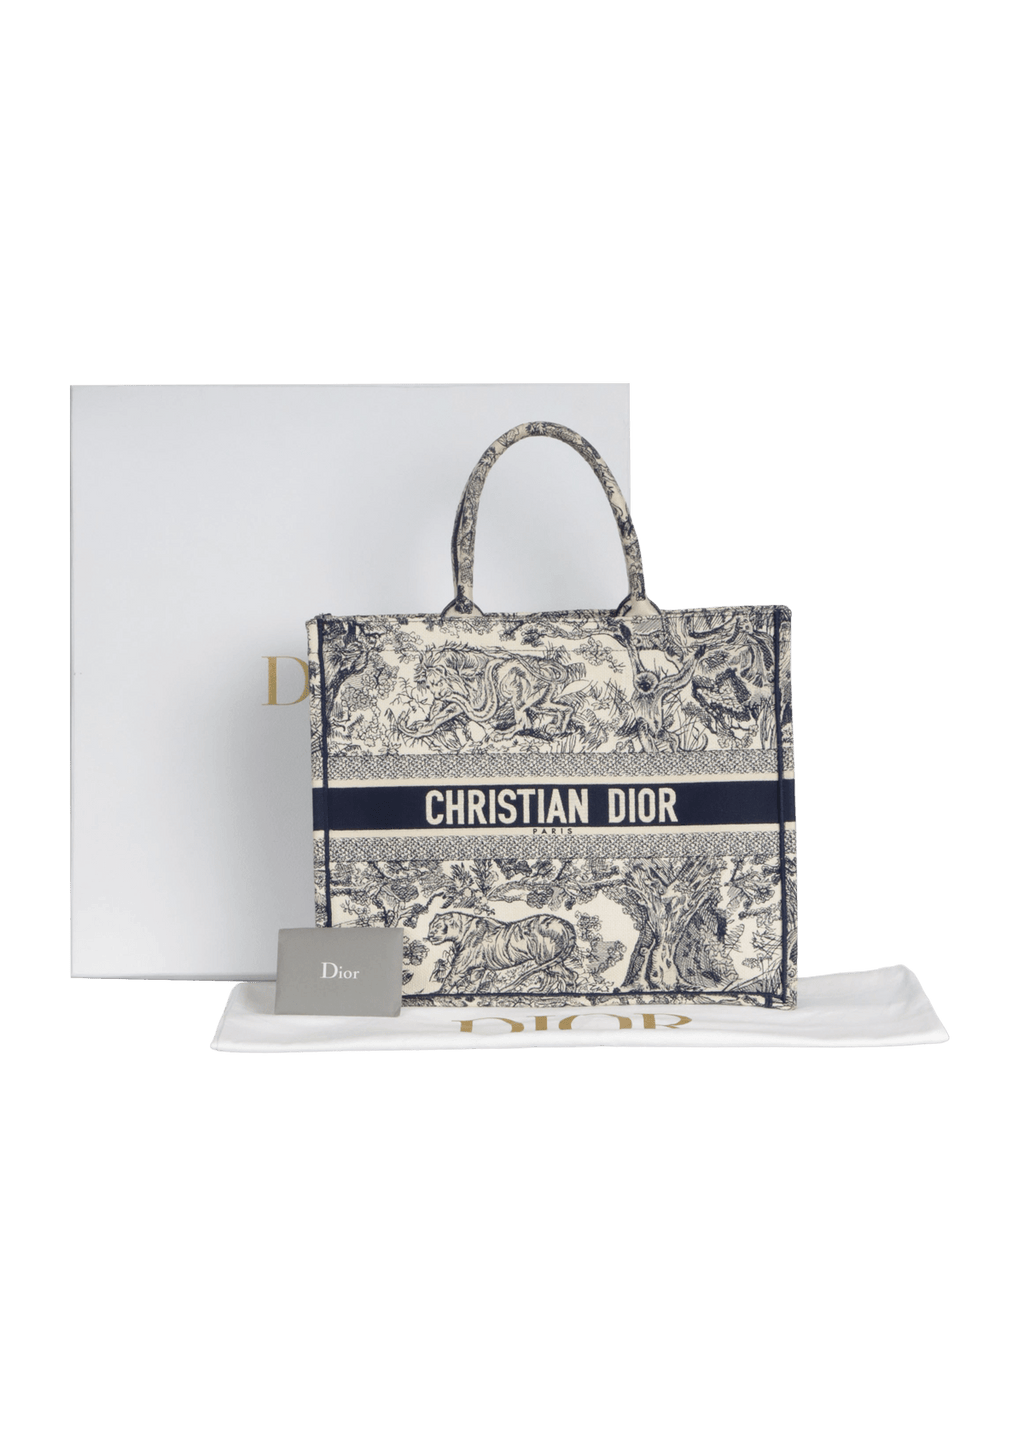 Christian Dior Book Toile de Jouy Canvas Tote Bag